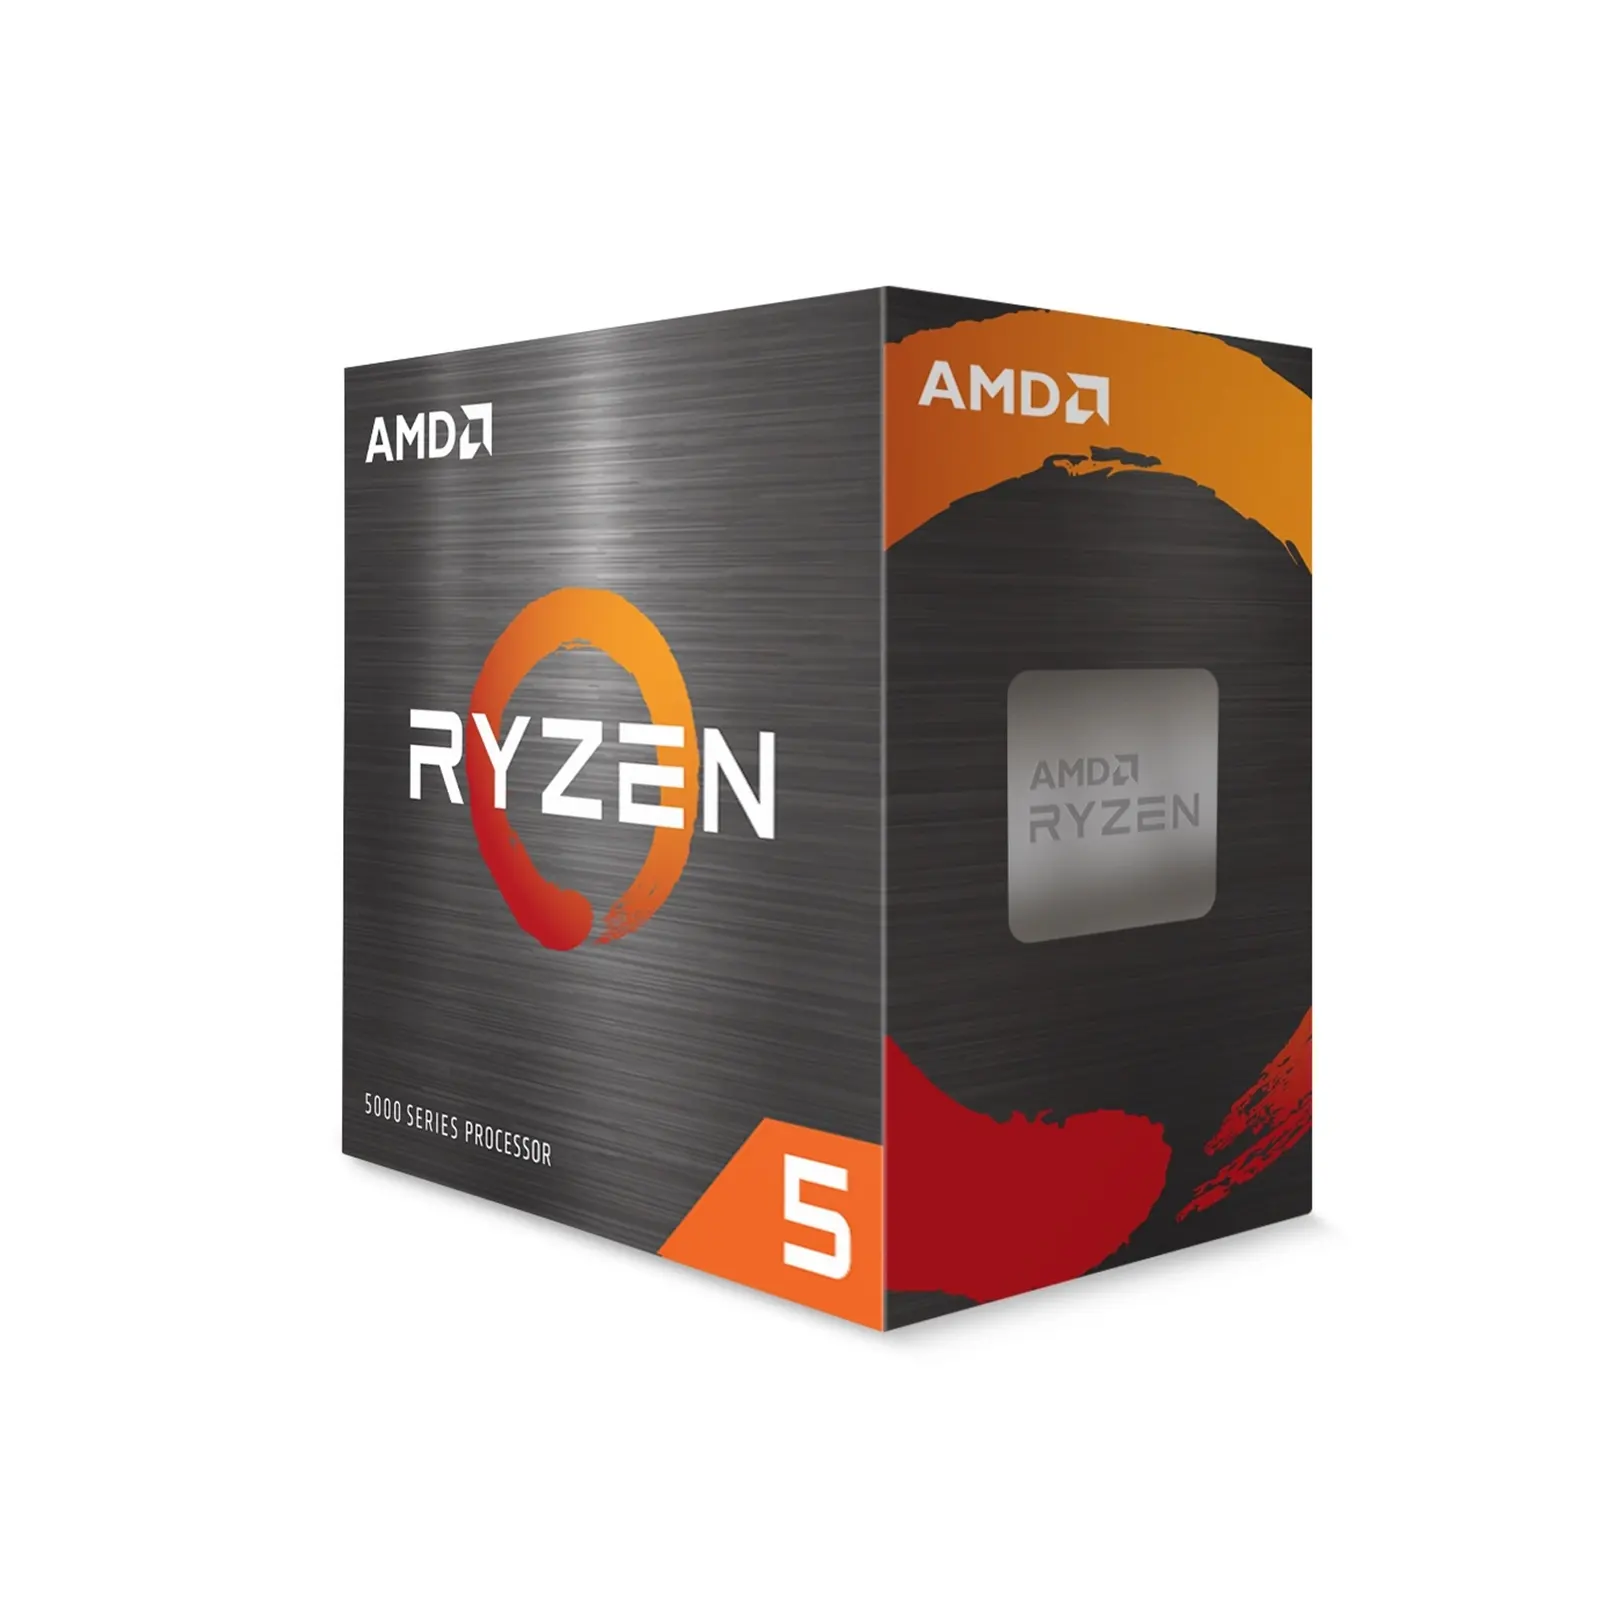 AMD Ryzen 5 5600X 3.7GHz 6 Core AM4 Processor, 12 Threads, 4.6GHz Boost